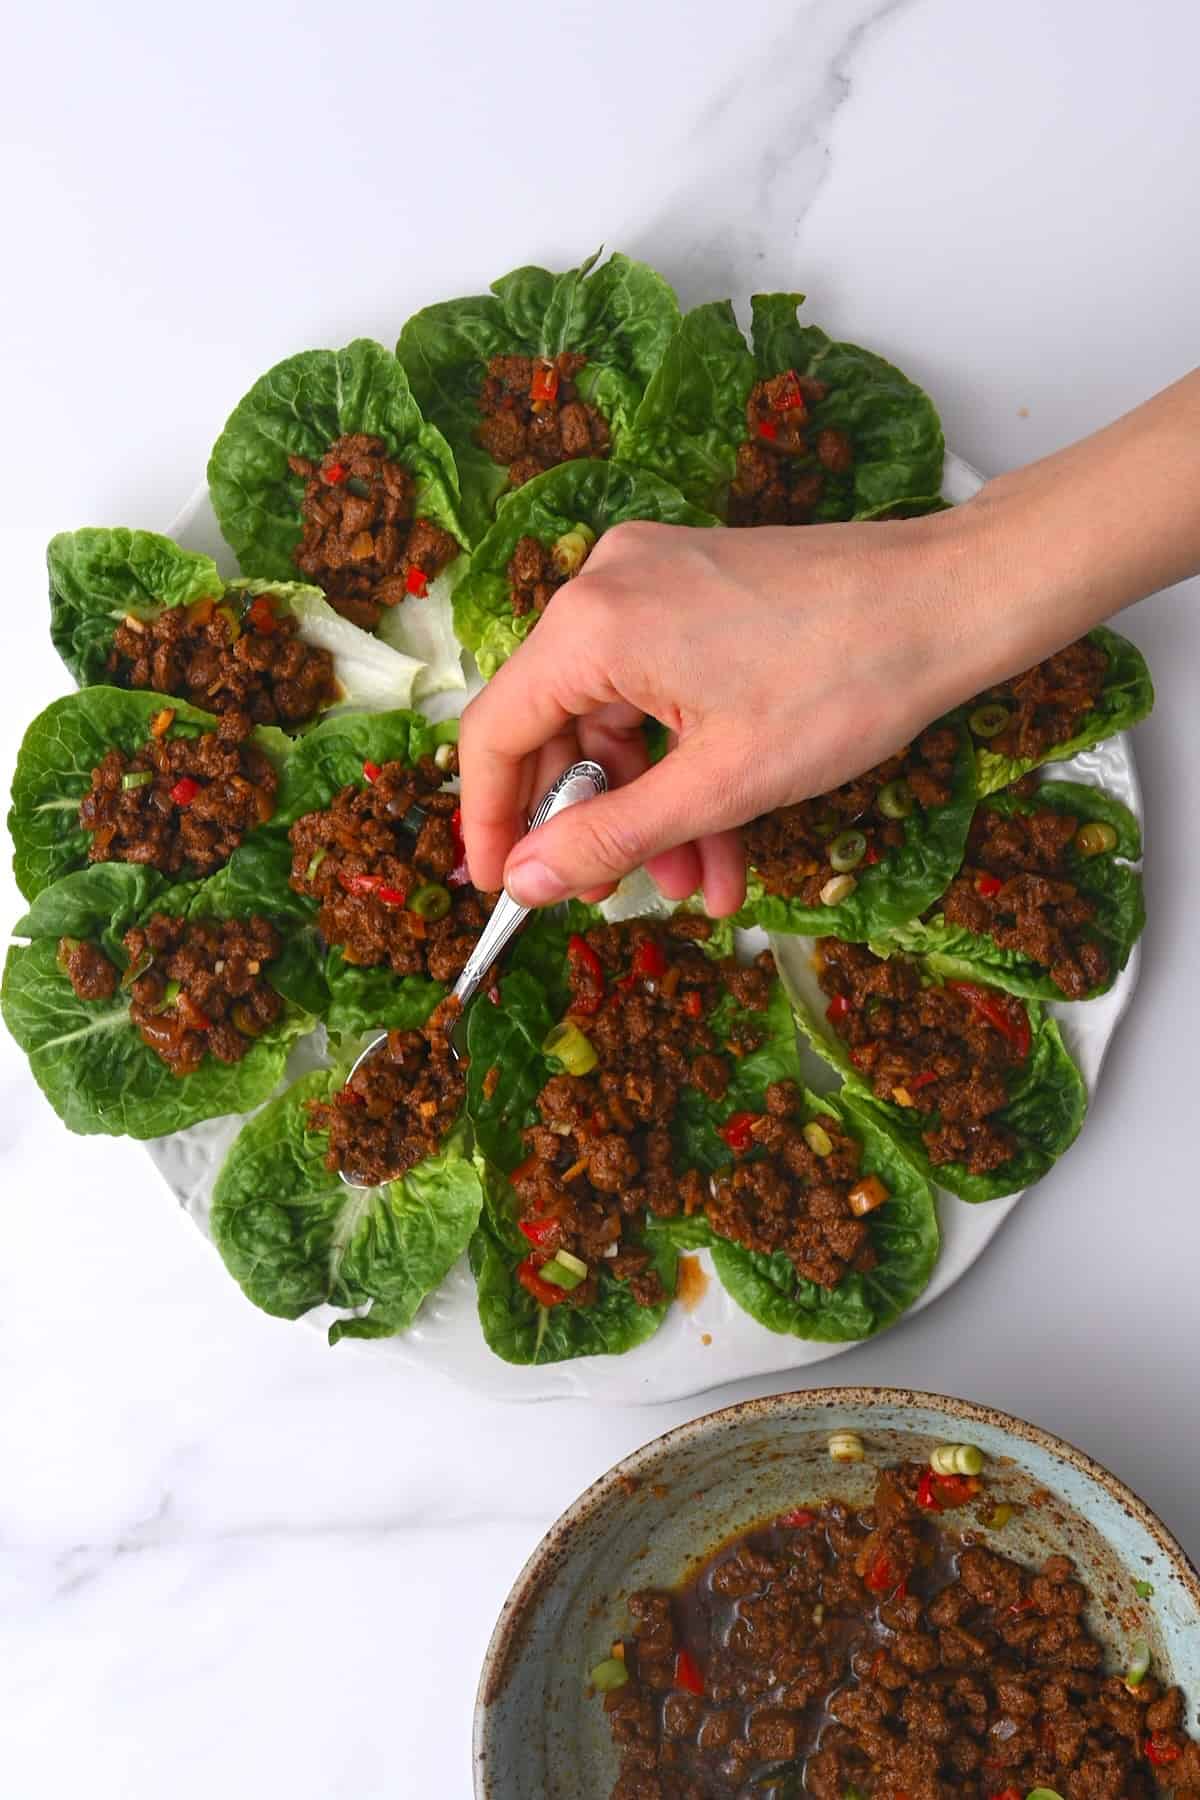 Assembling lettuce wraps on a plate